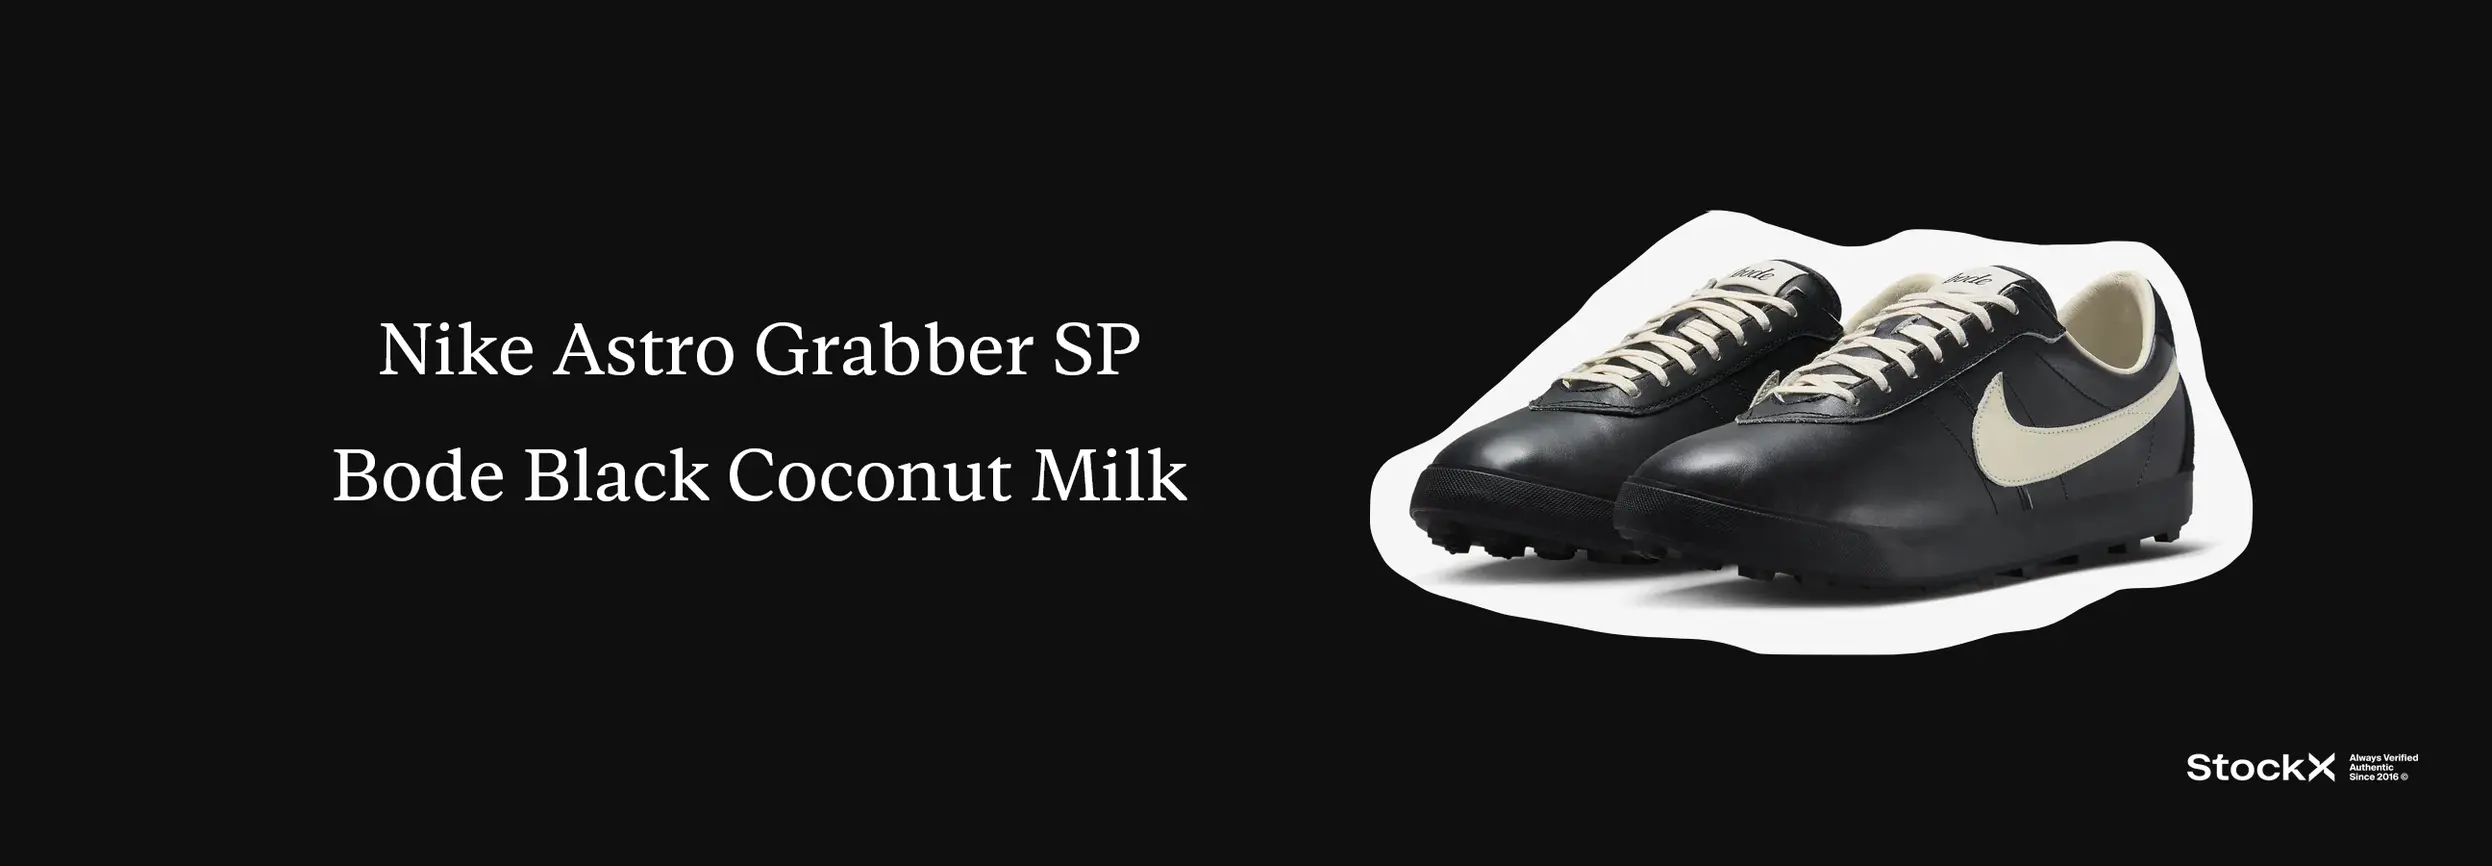 [WEB]Nike_Astro_Grabber_SP_Bode_Black_Coconut_Milk.png